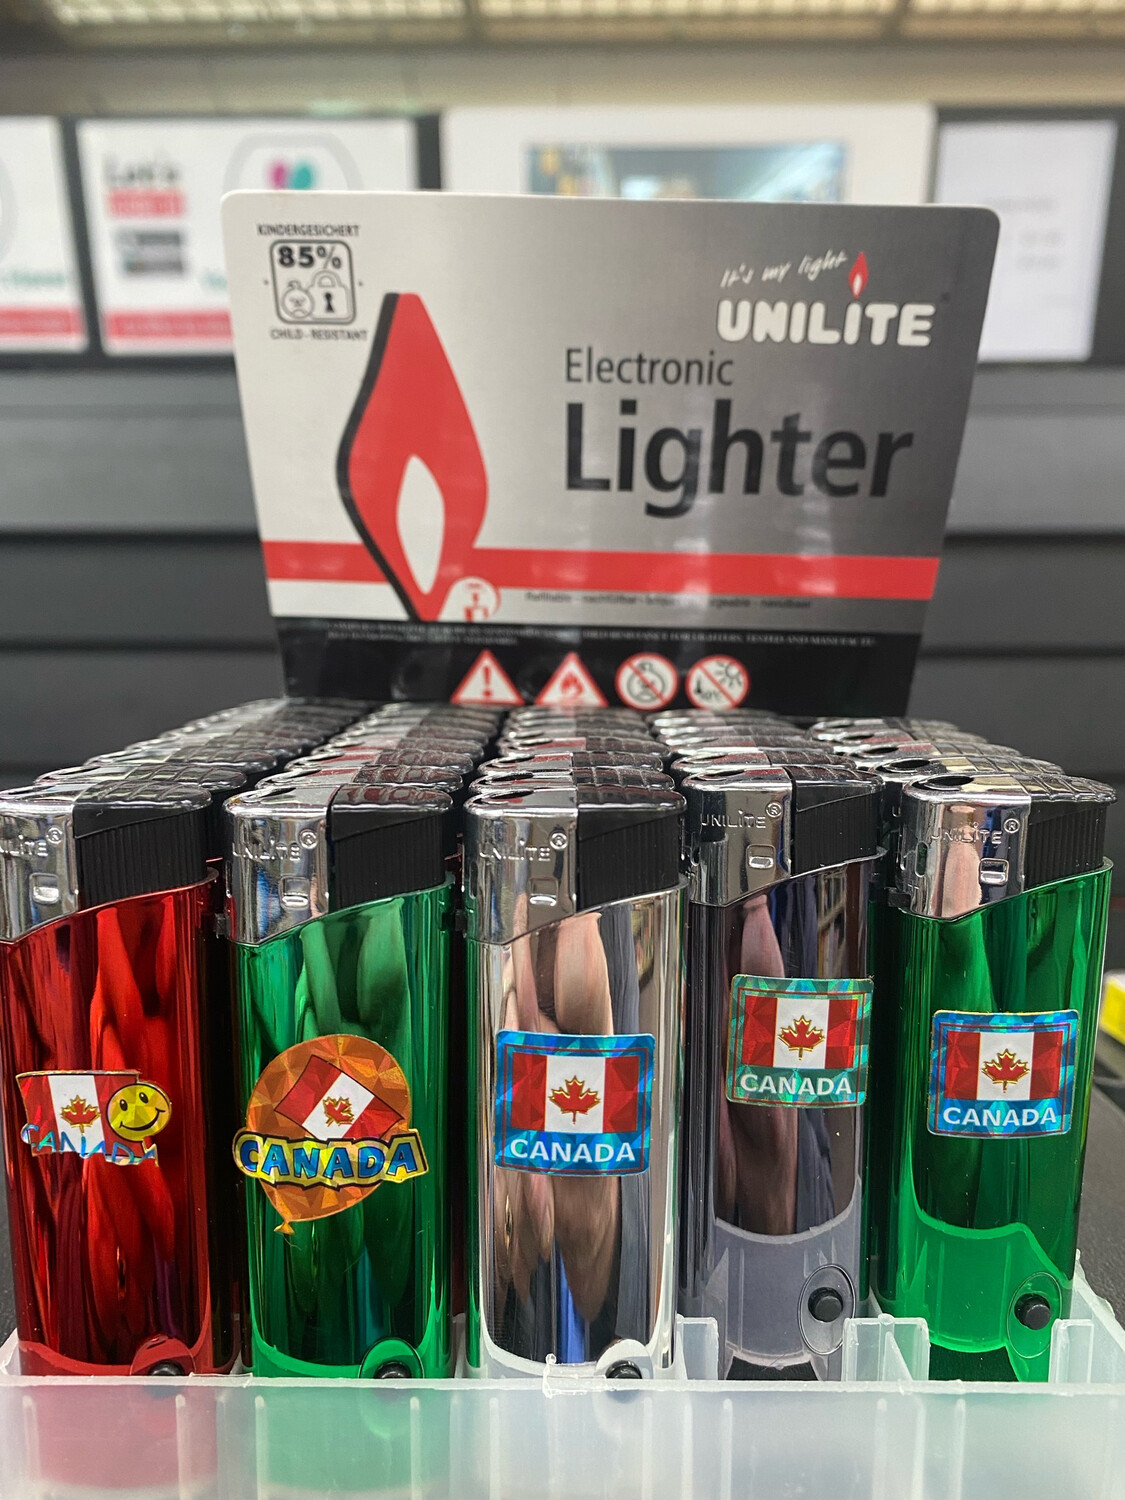 Unilite Electronic Lighter